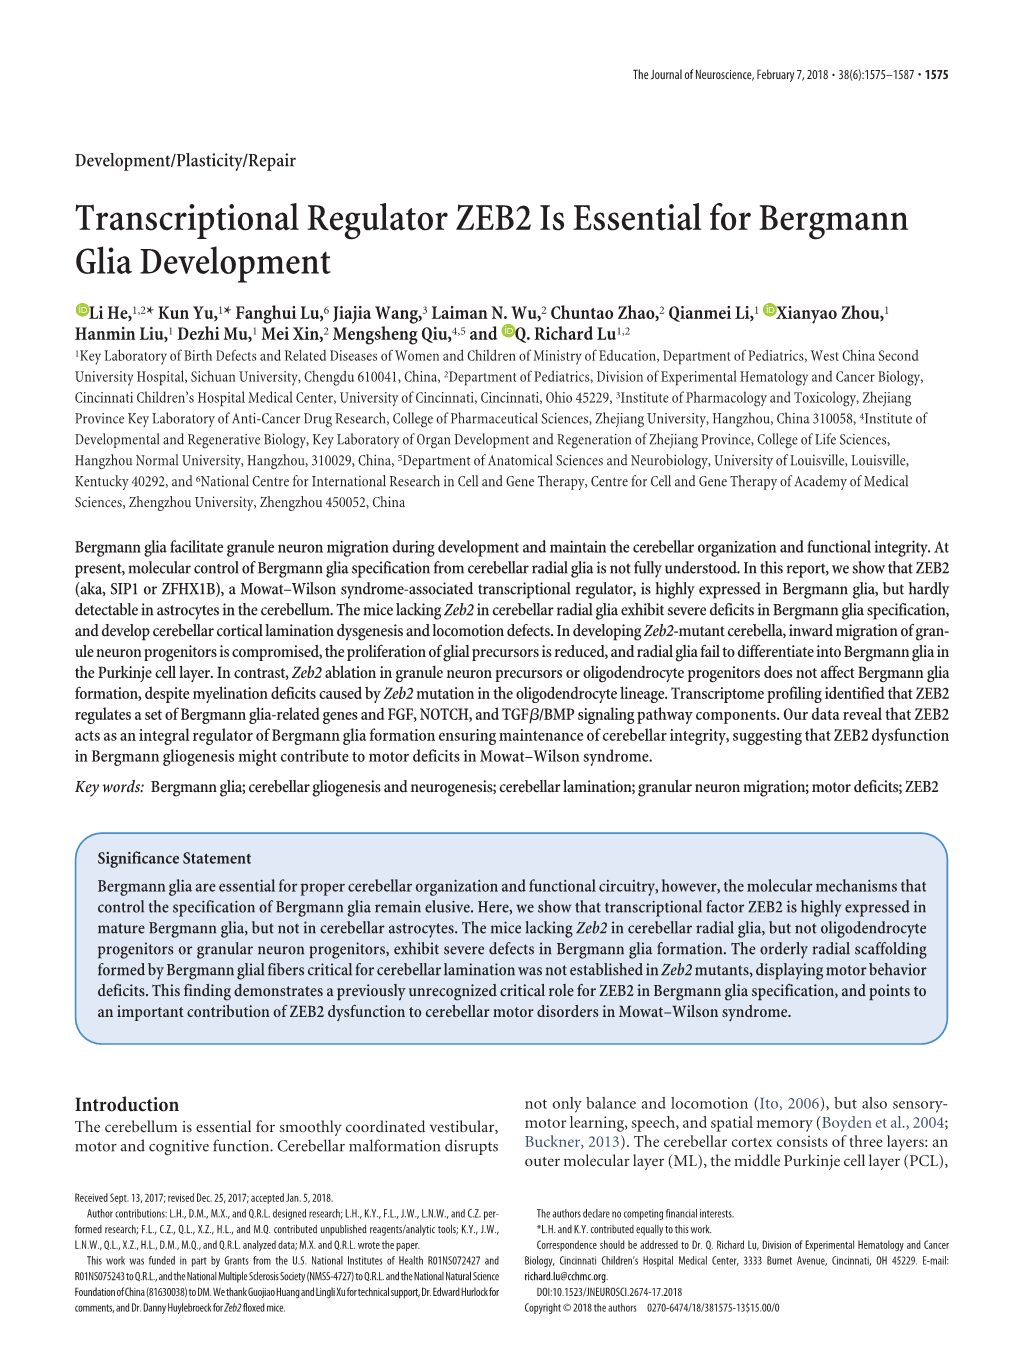 Transcriptional Regulator ZEB2 Is Essential for Bergmann Glia Development